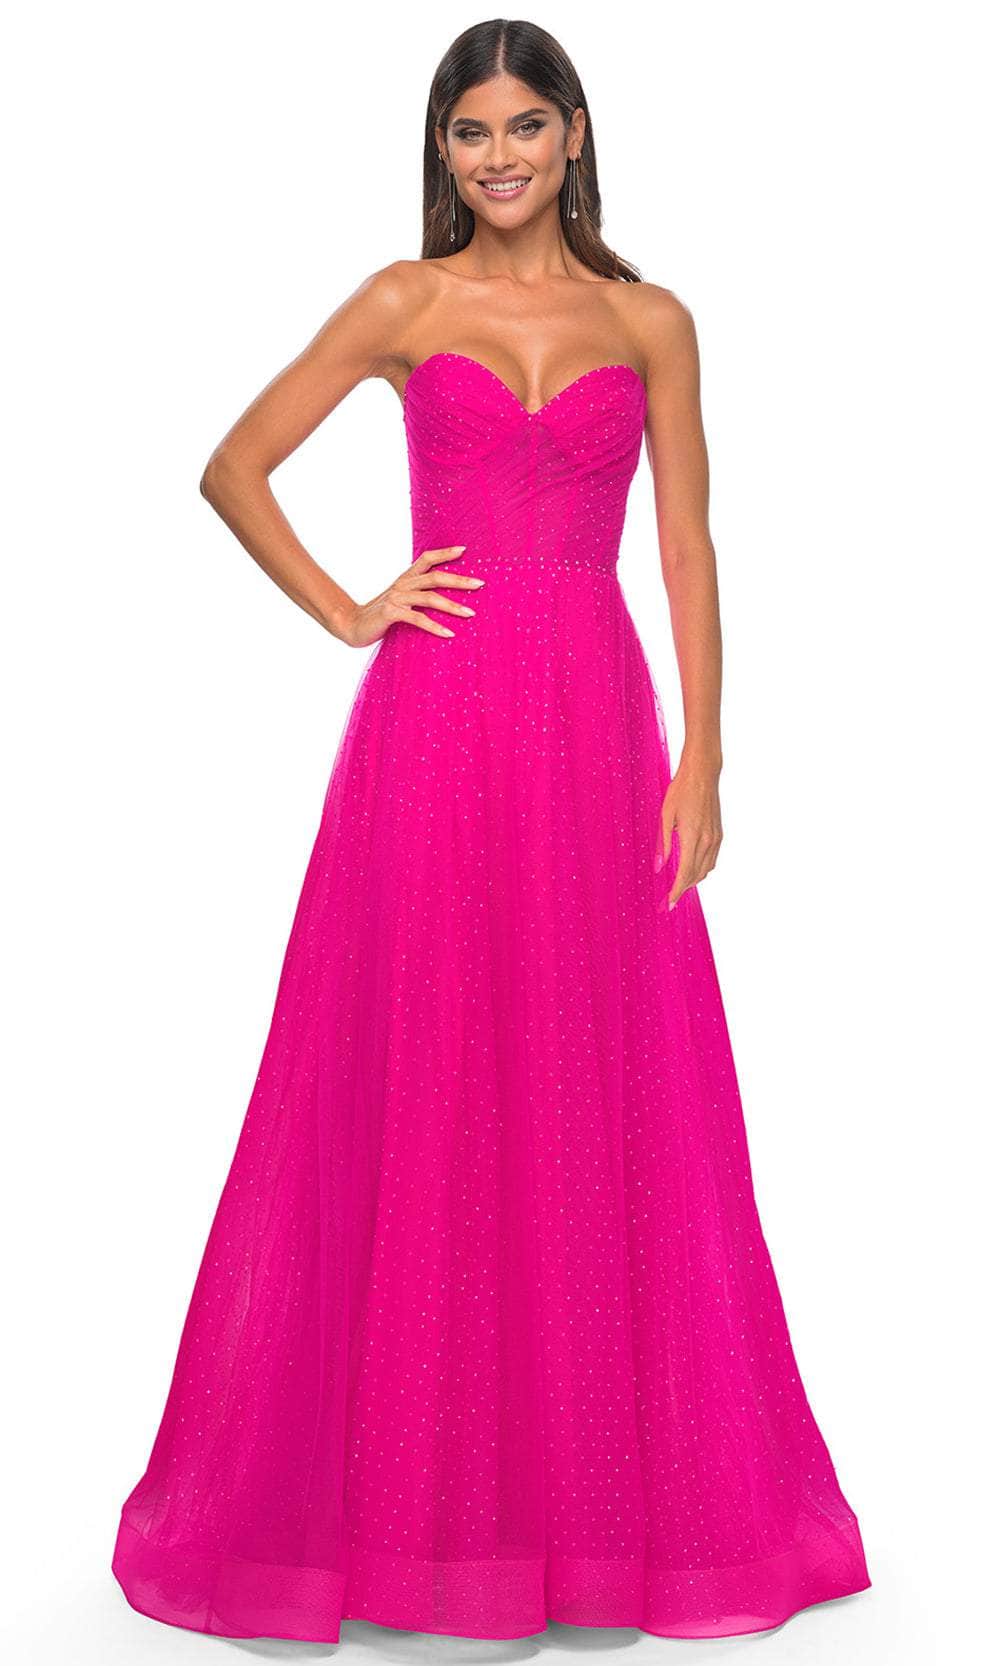 La Femme 31997 - Sweetheart Corset Prom Dress Special Occasion Dress 00 / Hot Fuchsia